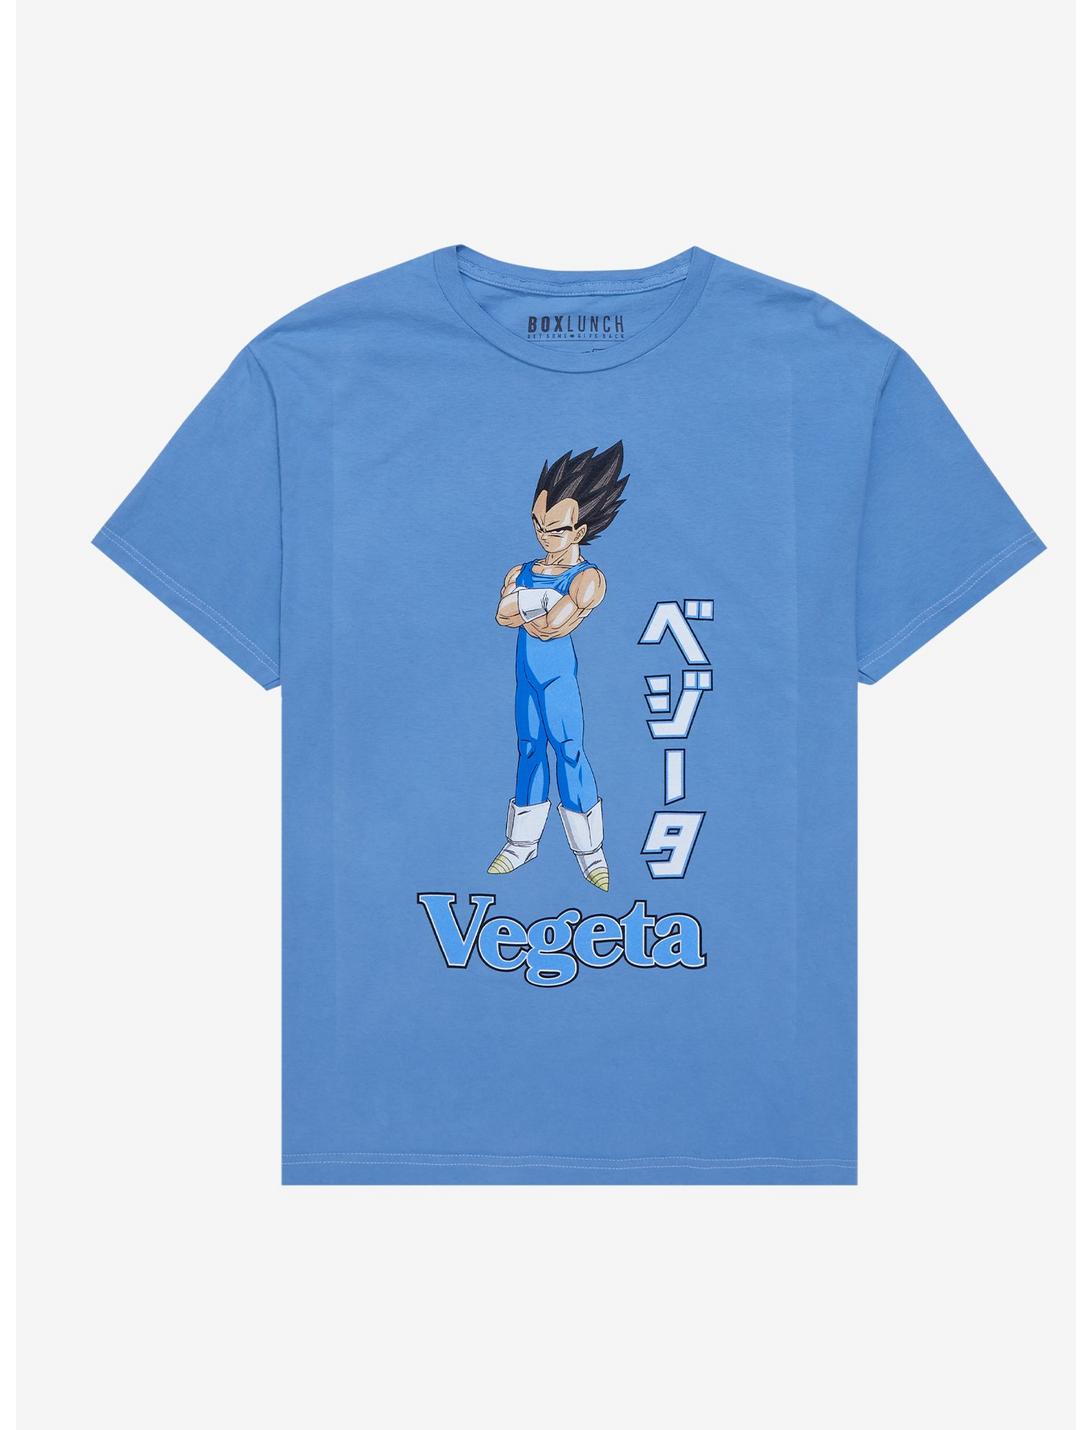 Dragon Ball Z Vegeta Portrait T-Shirt - BoxLunch Exclusive, LIGHT BLUE, hi-res